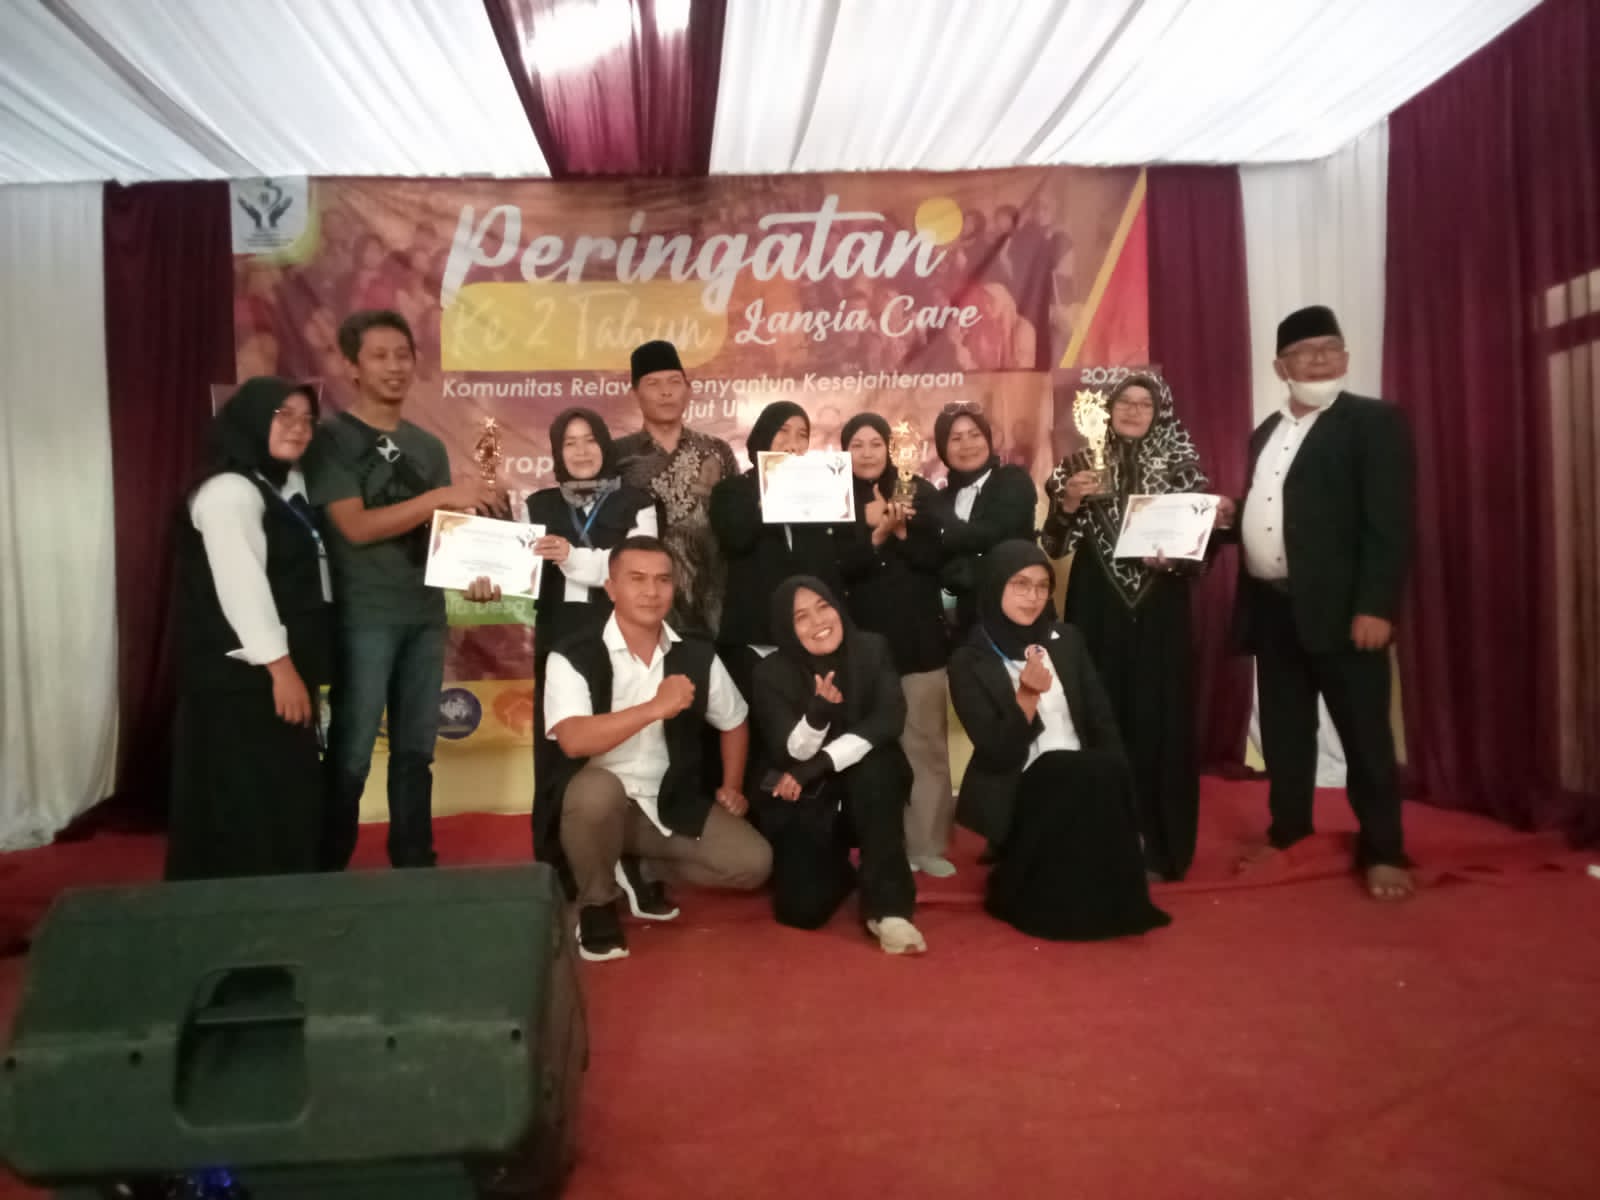 MILANGKALA 2 tahun lansia care dilaksanakan di kecamatan gunung halu kabupaten Bandung barat